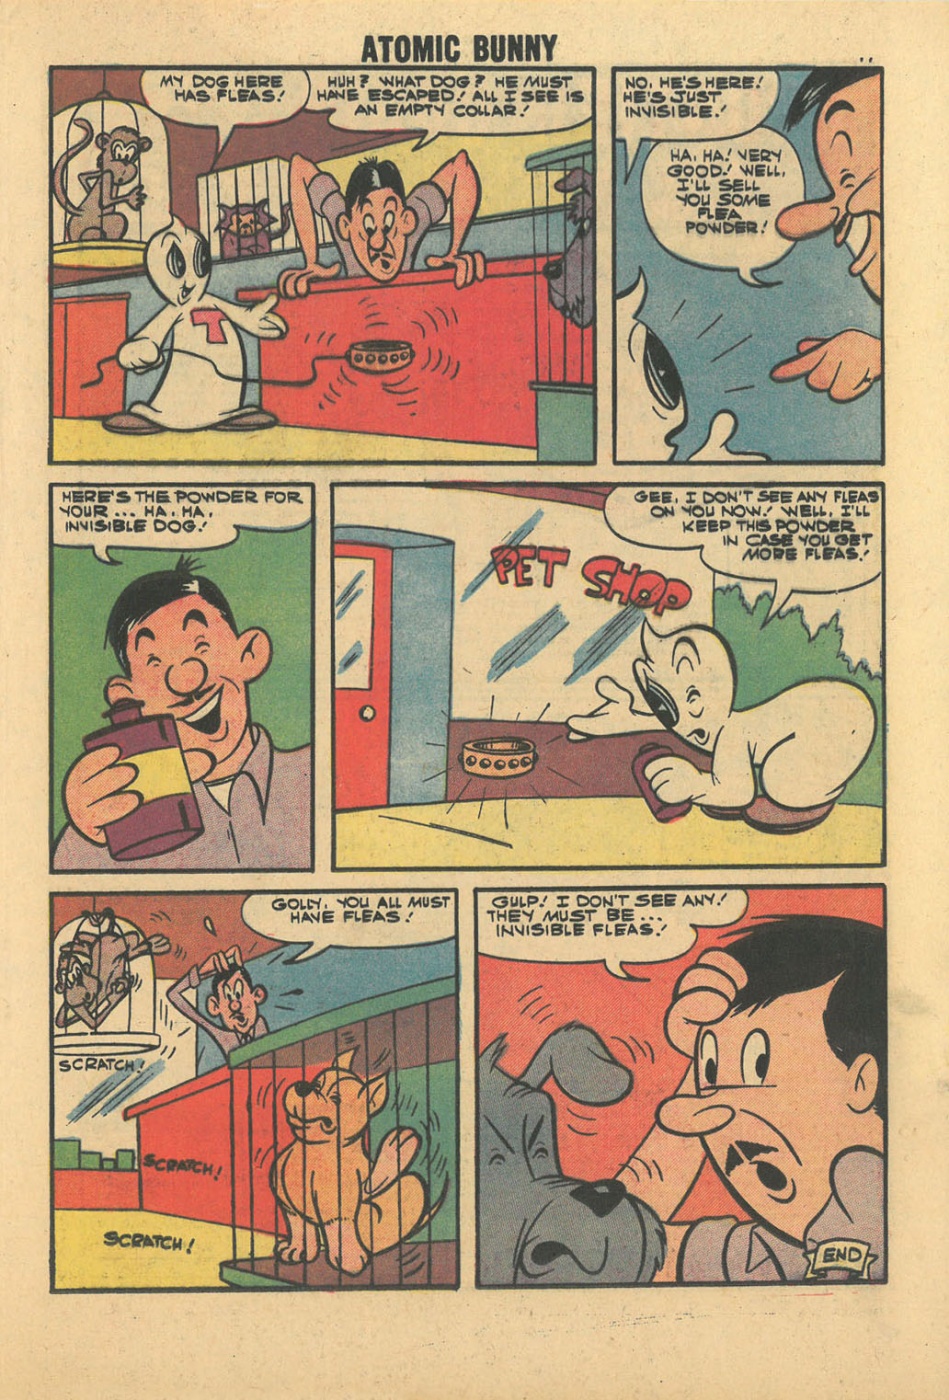 Atomic-Bunny-Comic-Strips (b) (20)